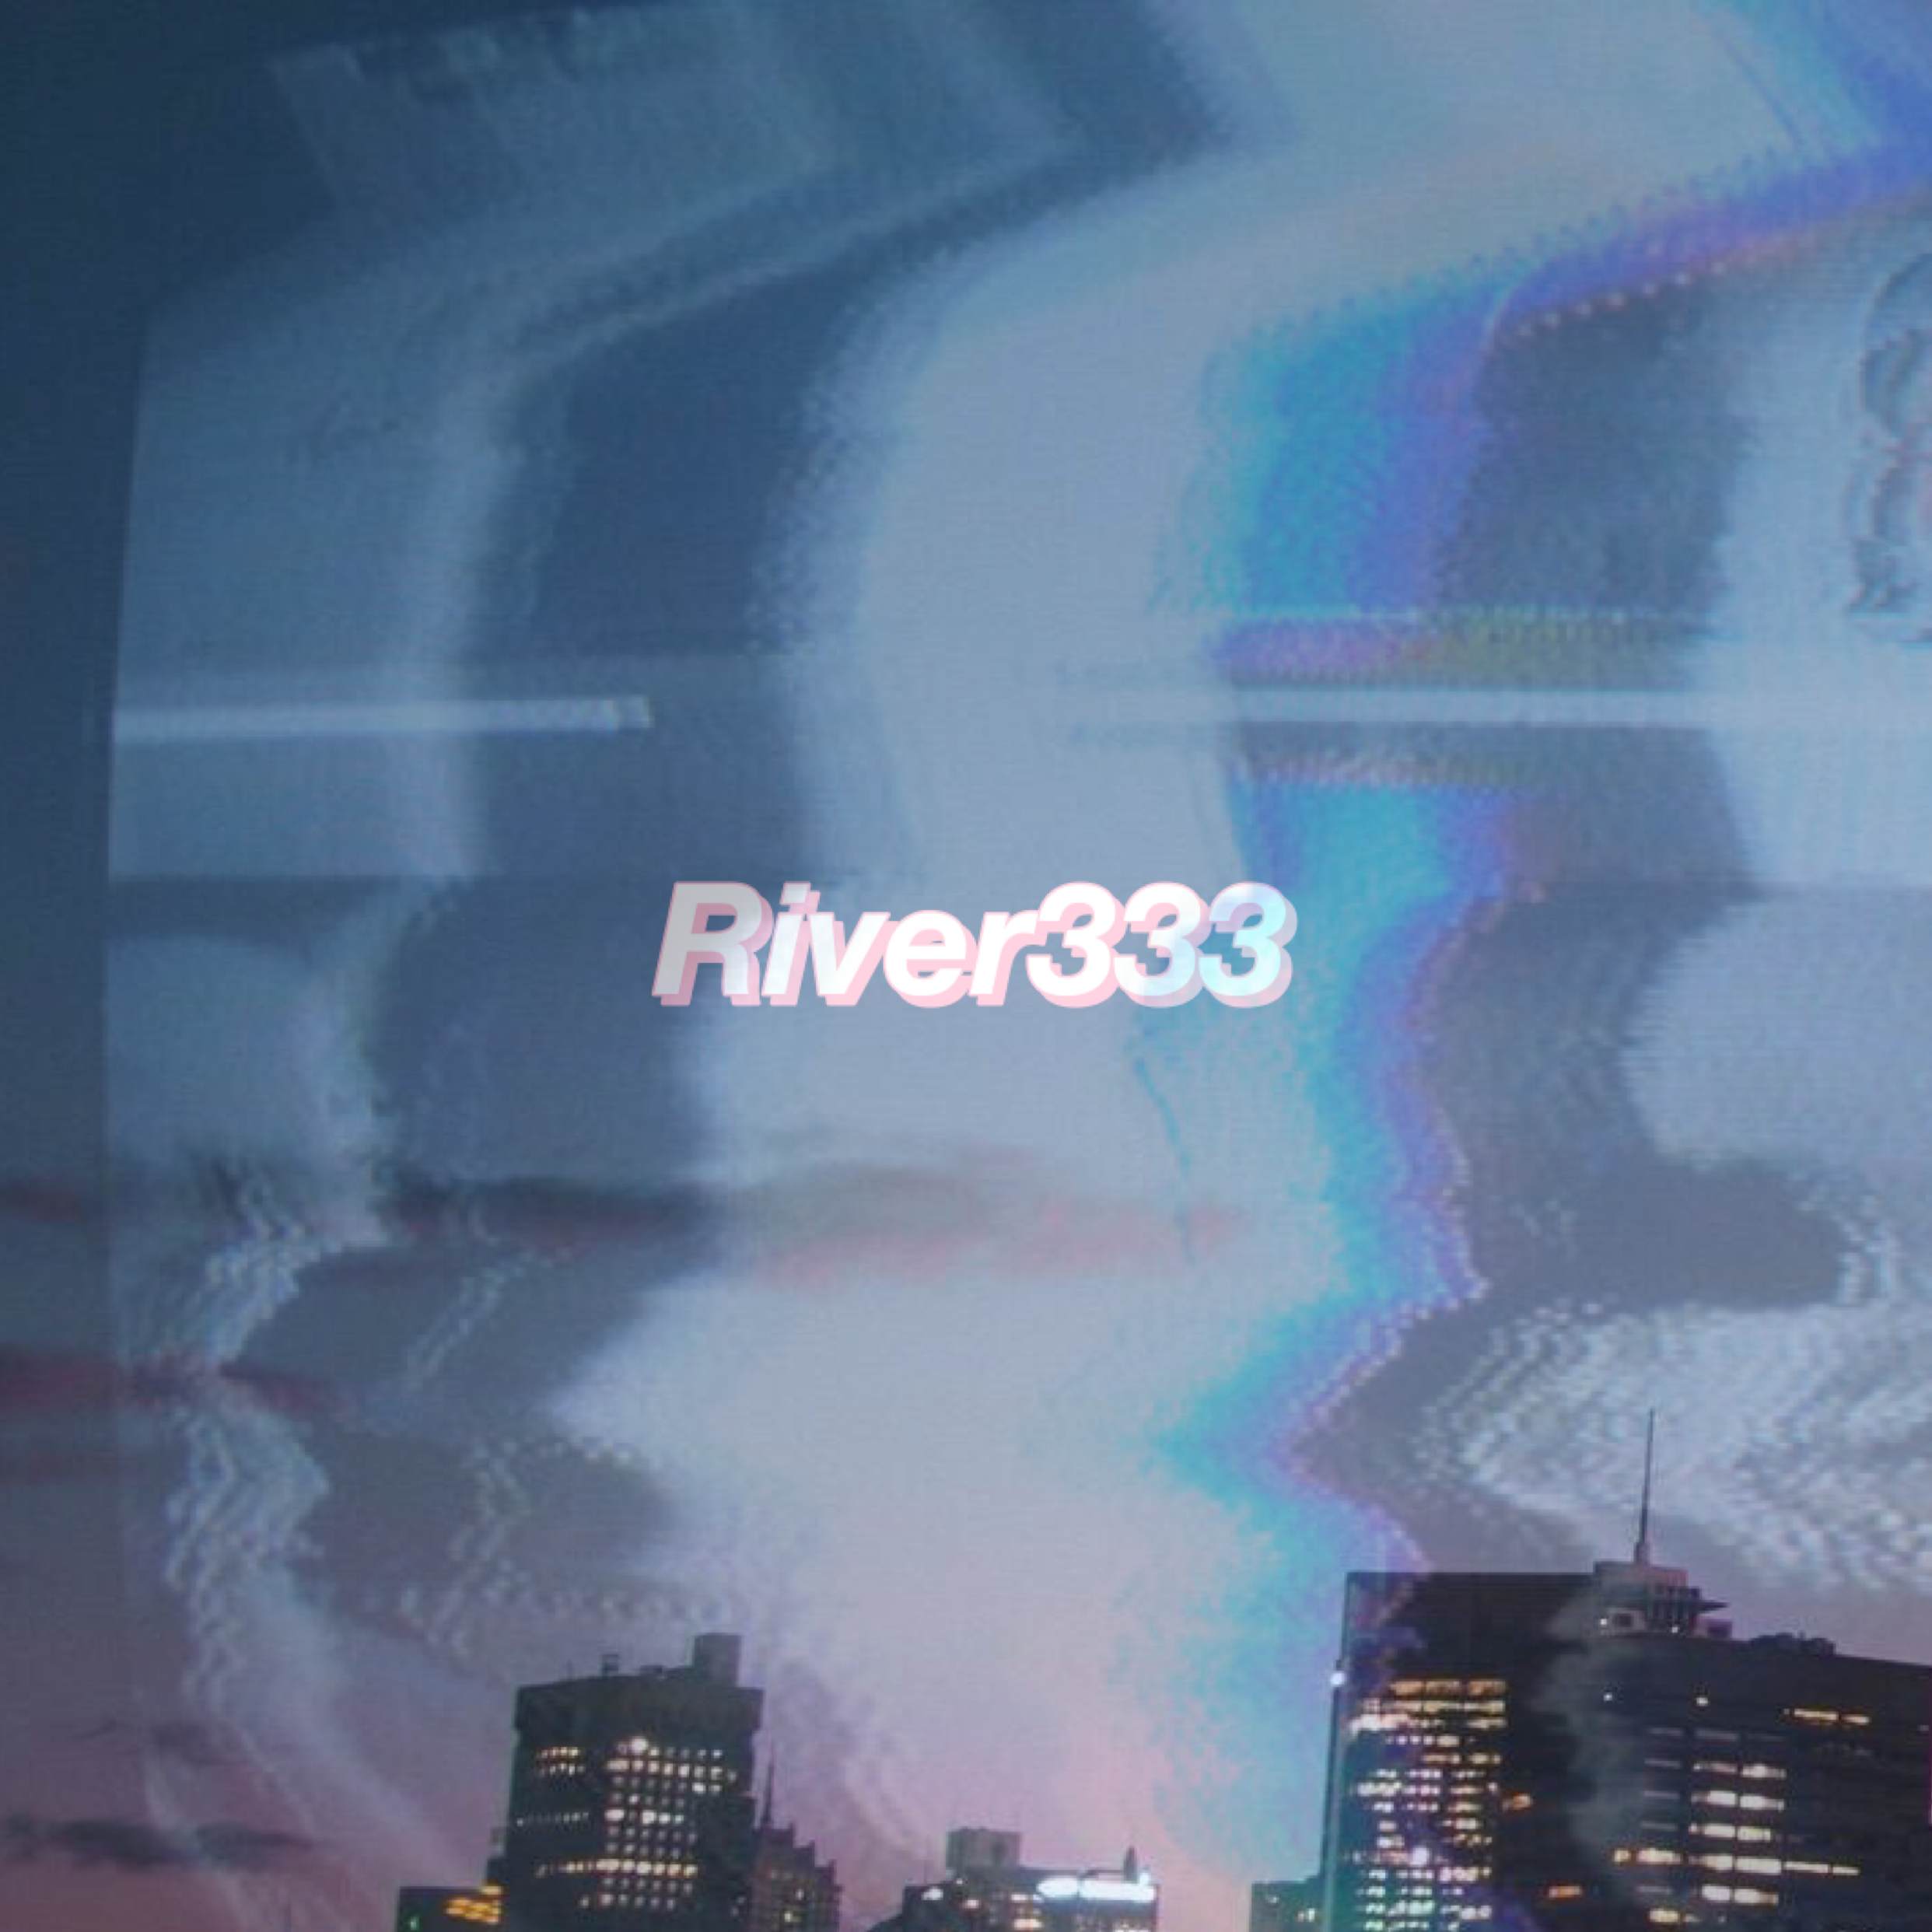 River333